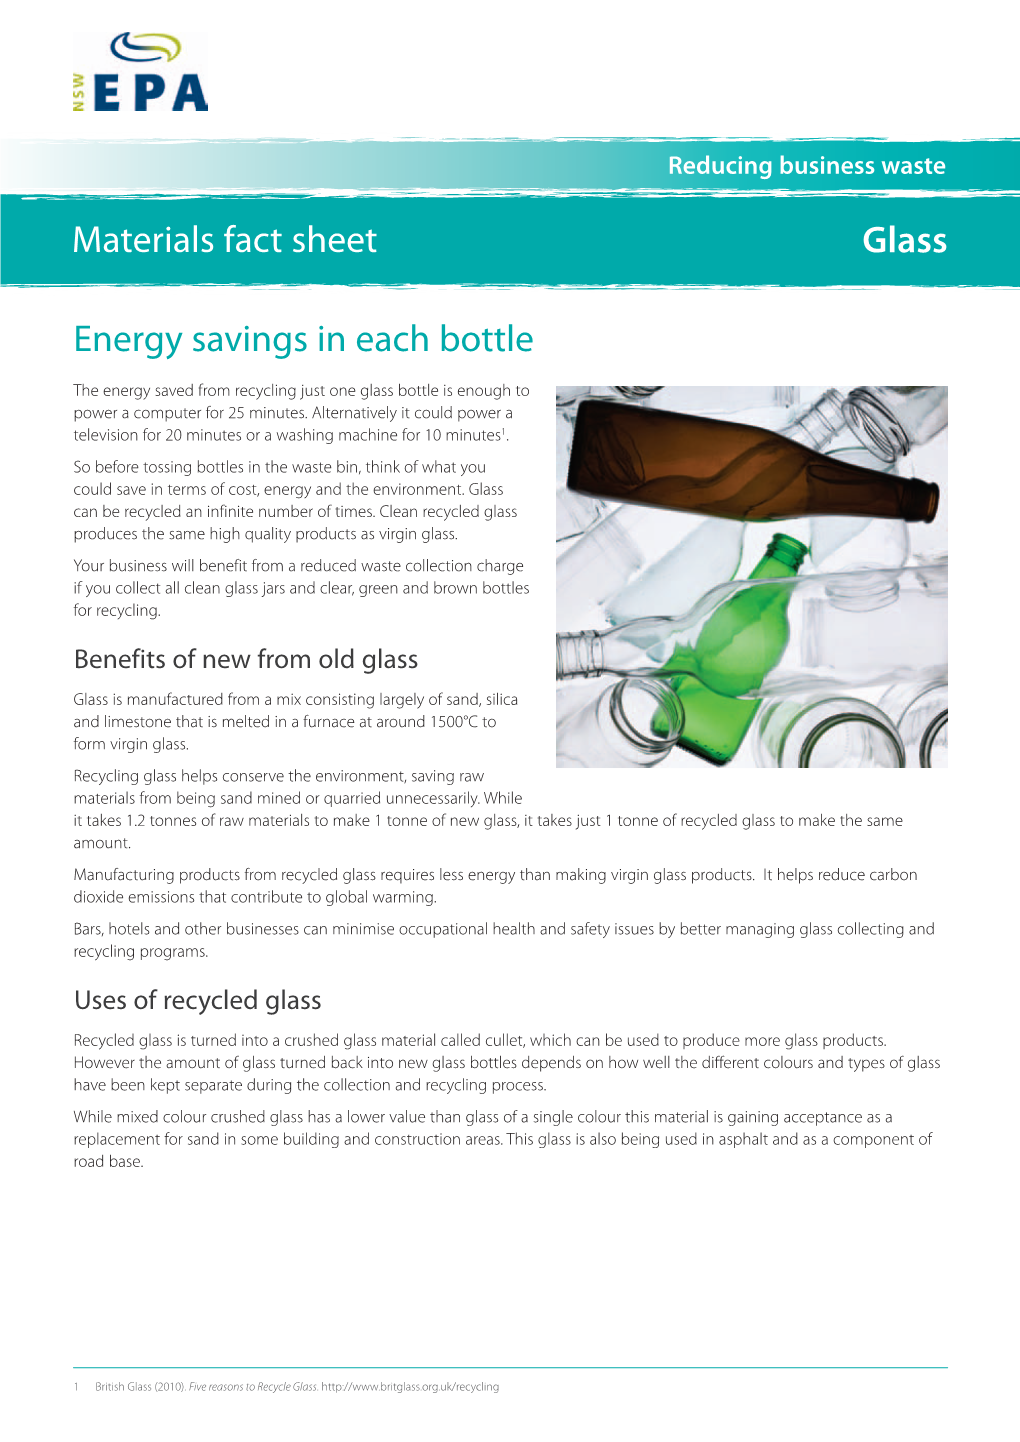 Reducing Business Waste Materials Fact Sheet: Glass